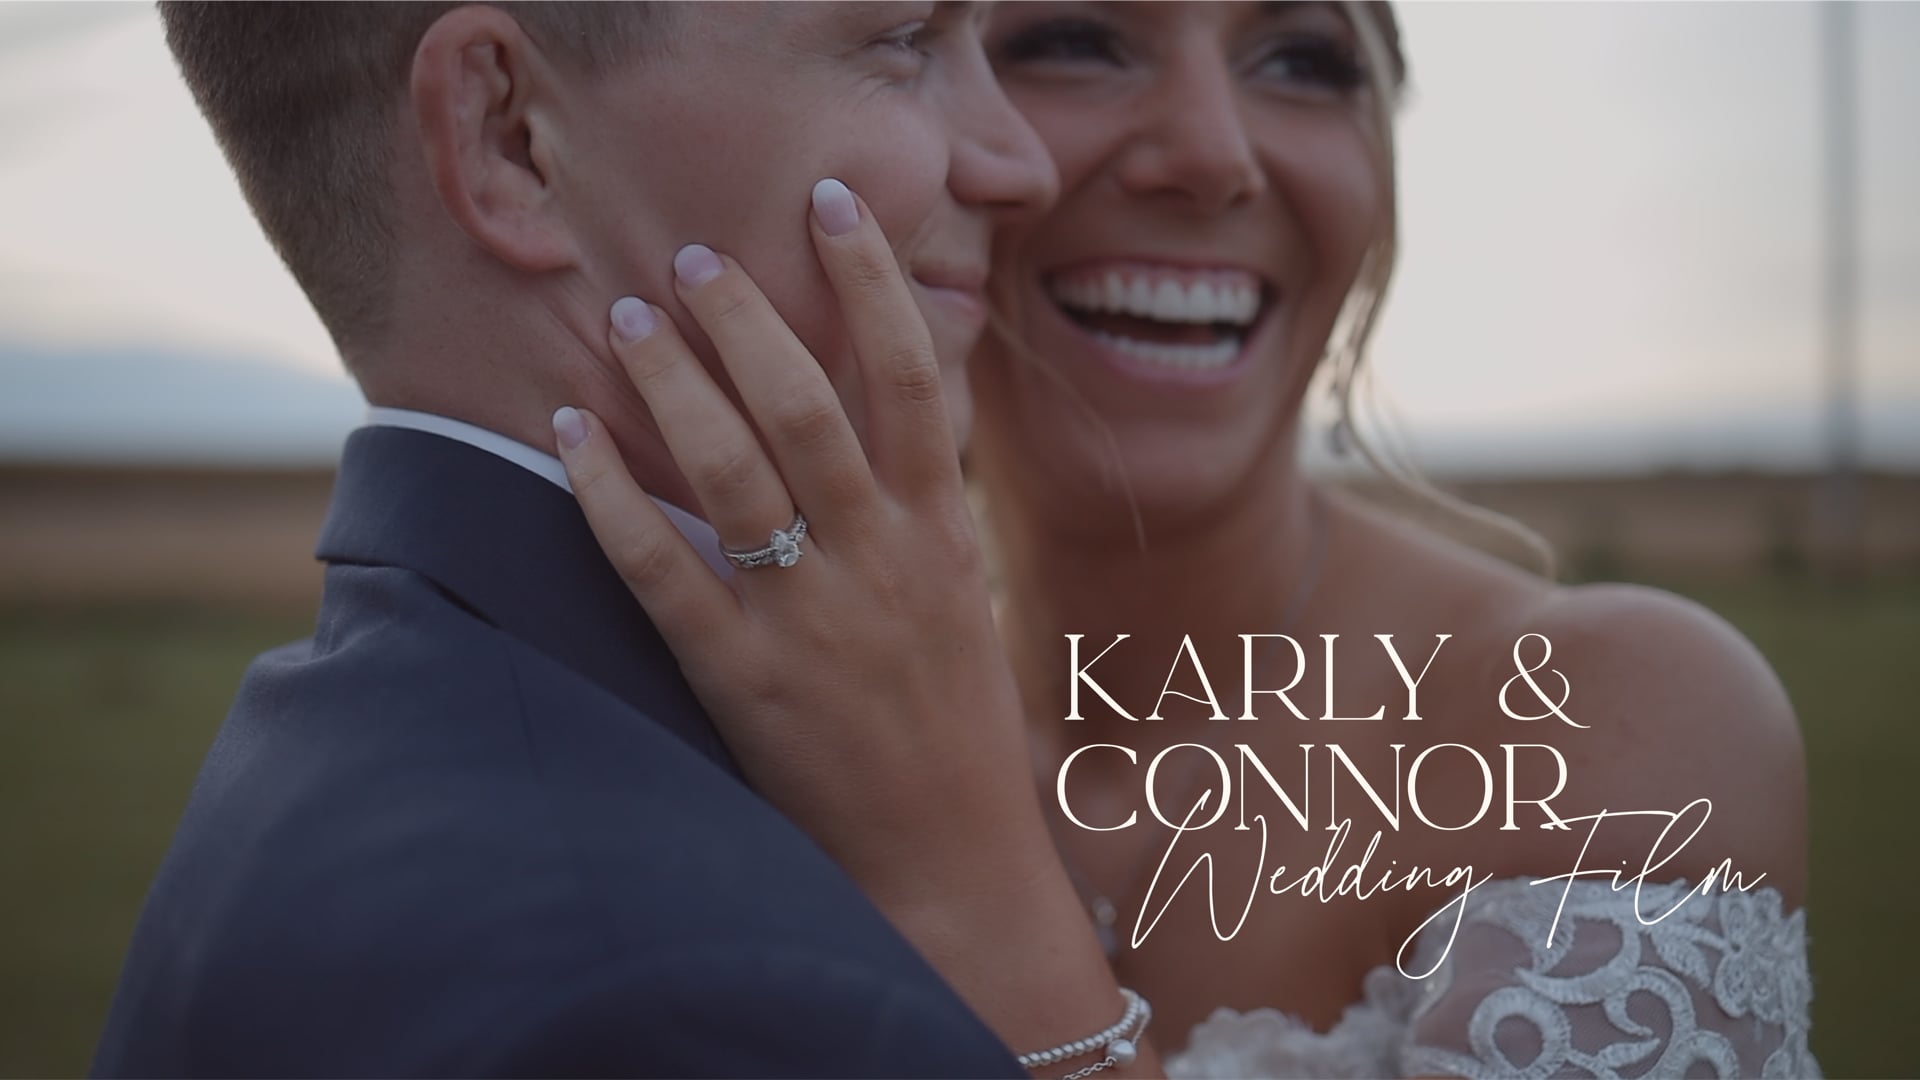 Connor & Karly Wedding Film